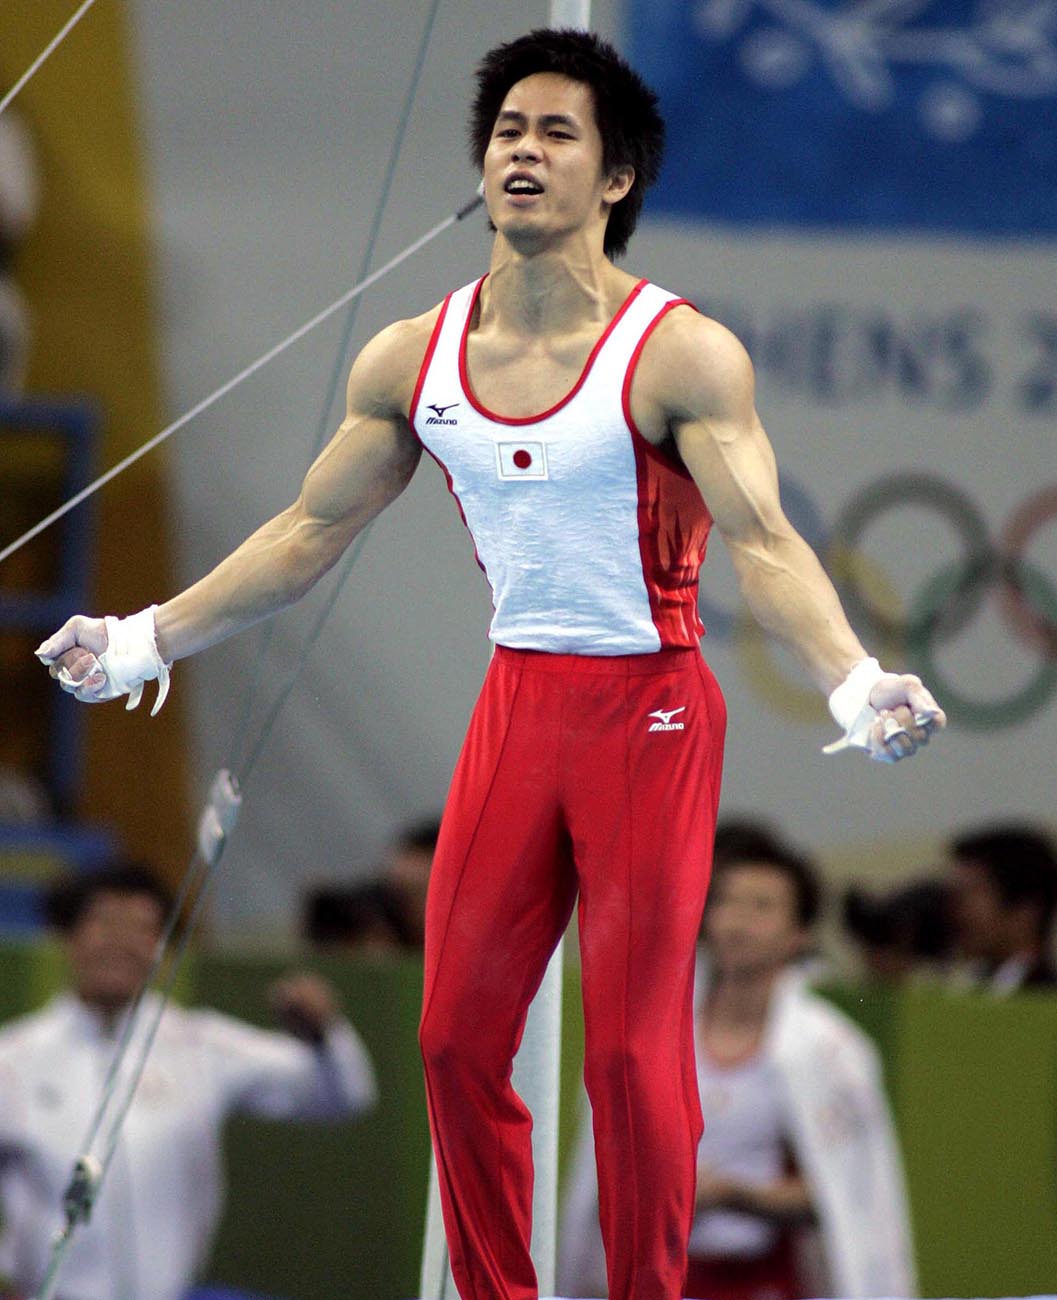 Gymnast Hiroyuki Tomita